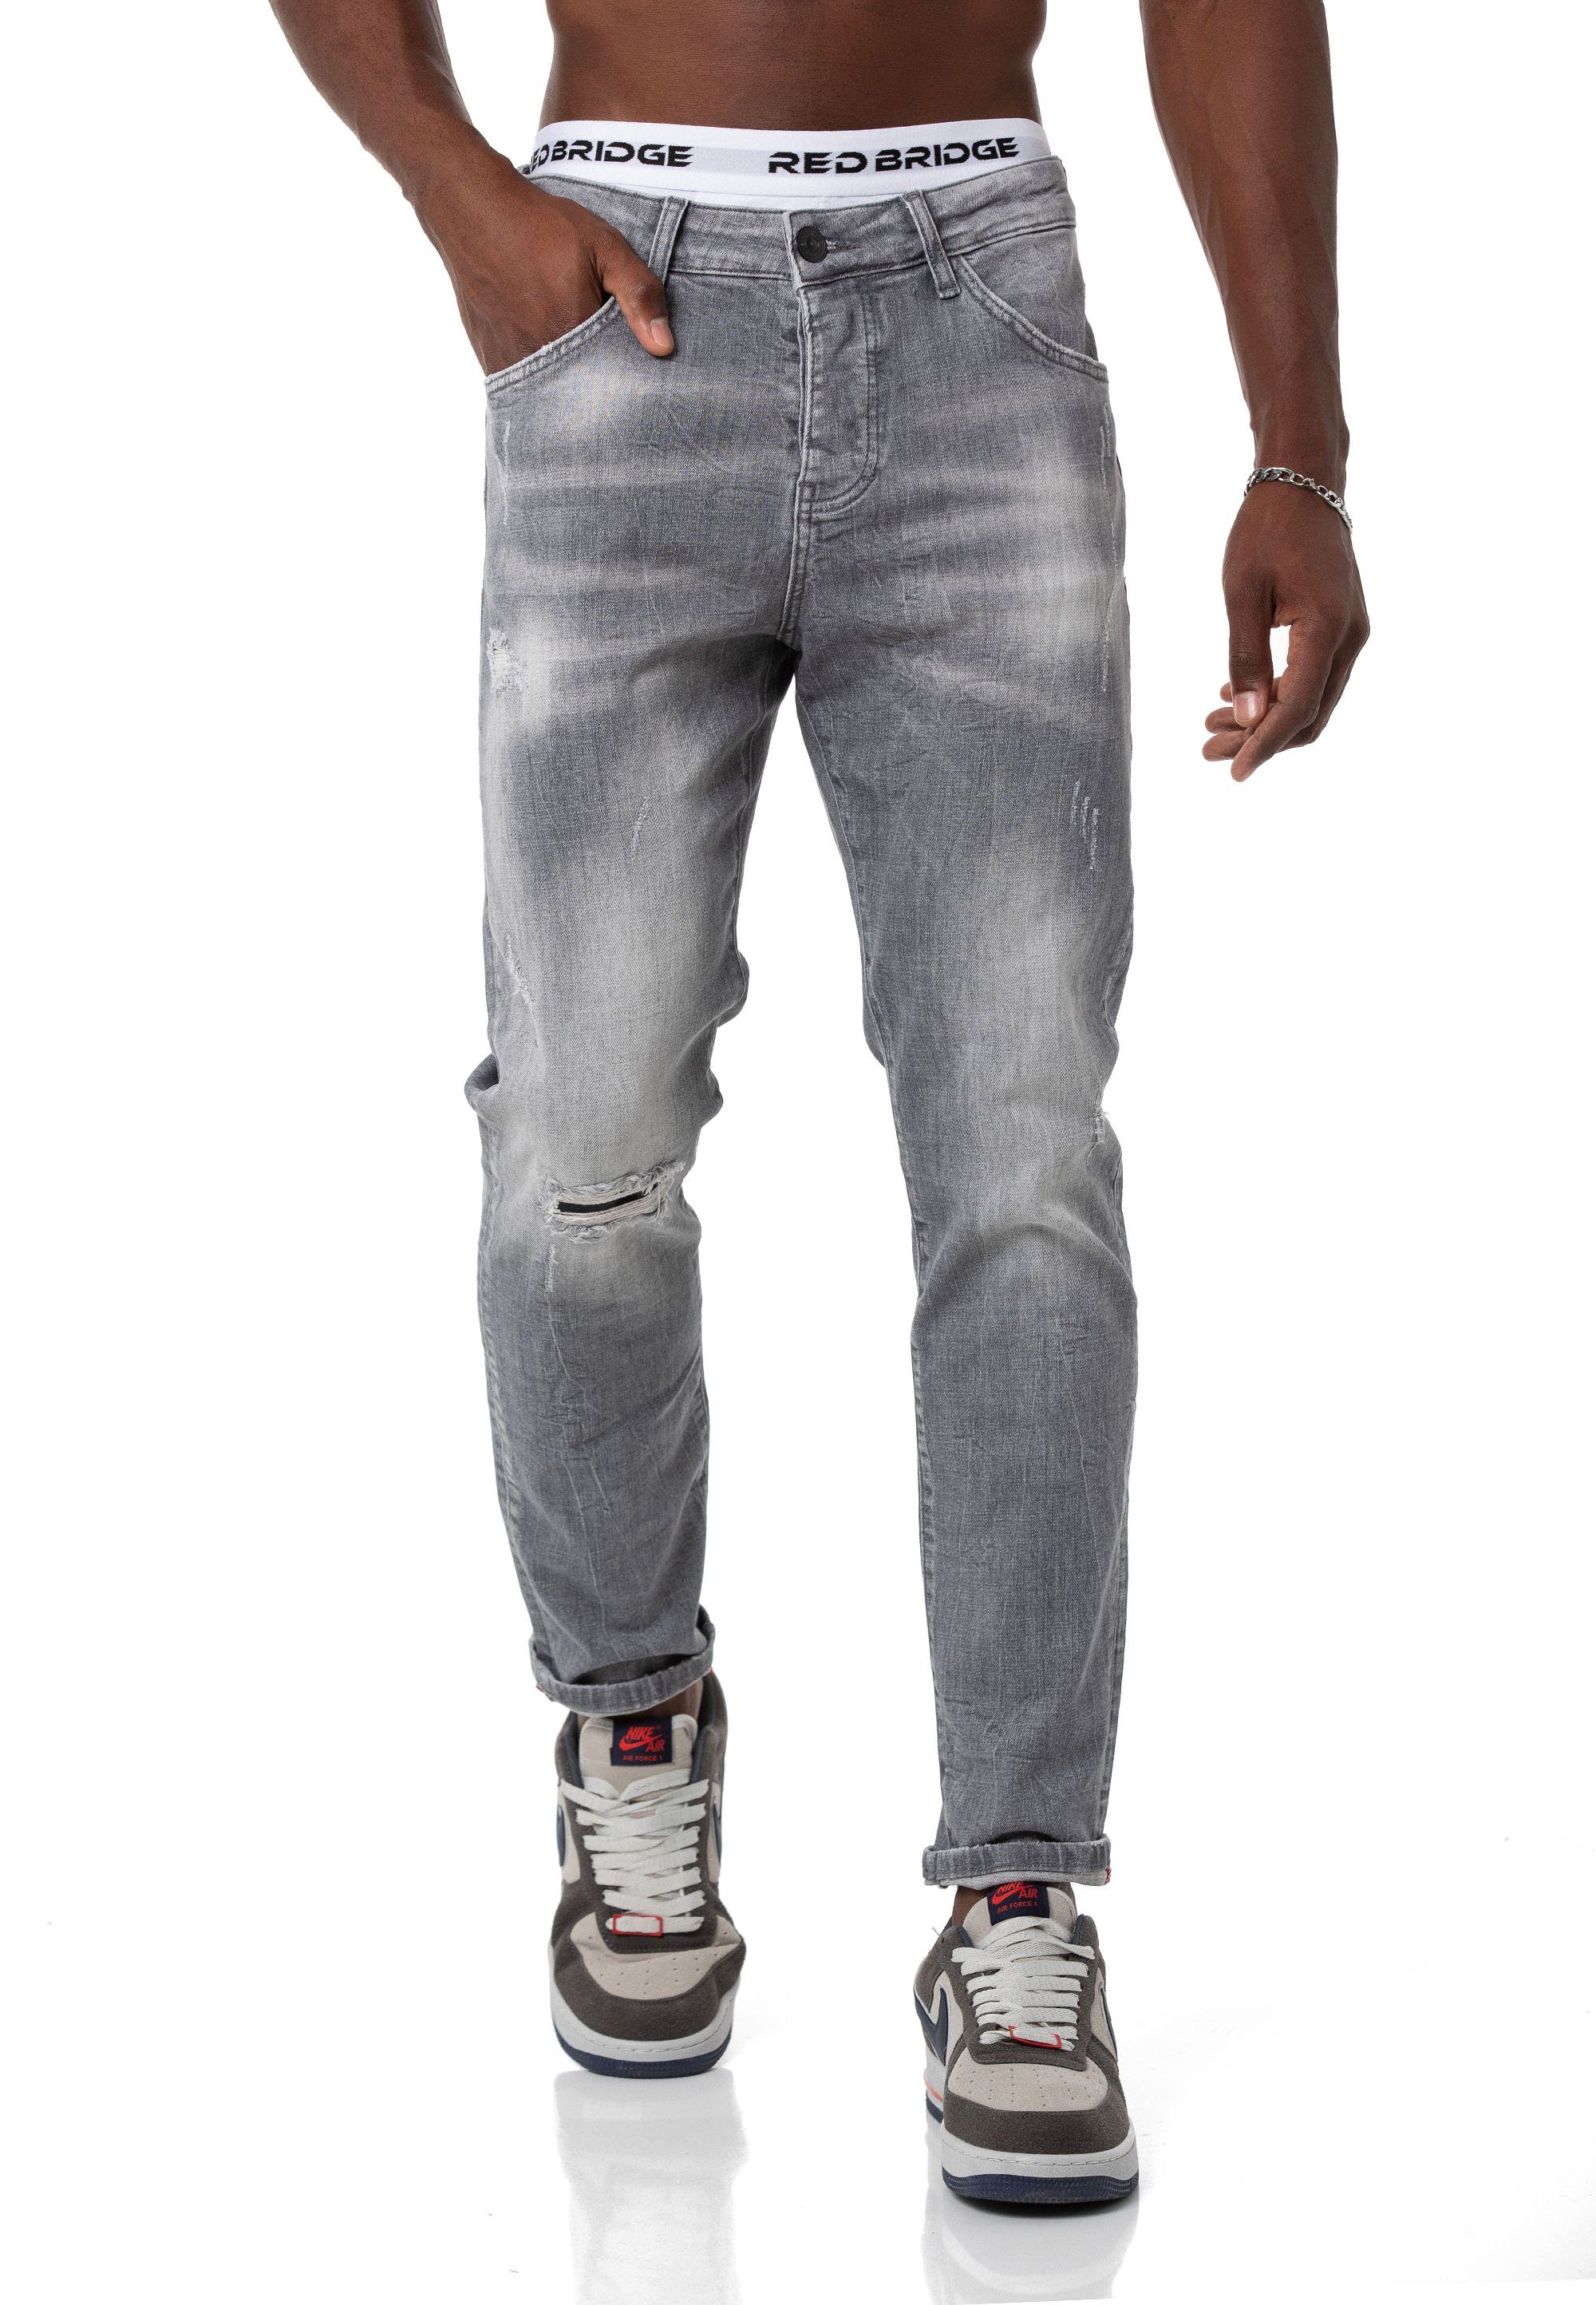 Leg Pants RedBridge Straight Grau Denim Distressed-Look Slim-fit-Jeans Hose